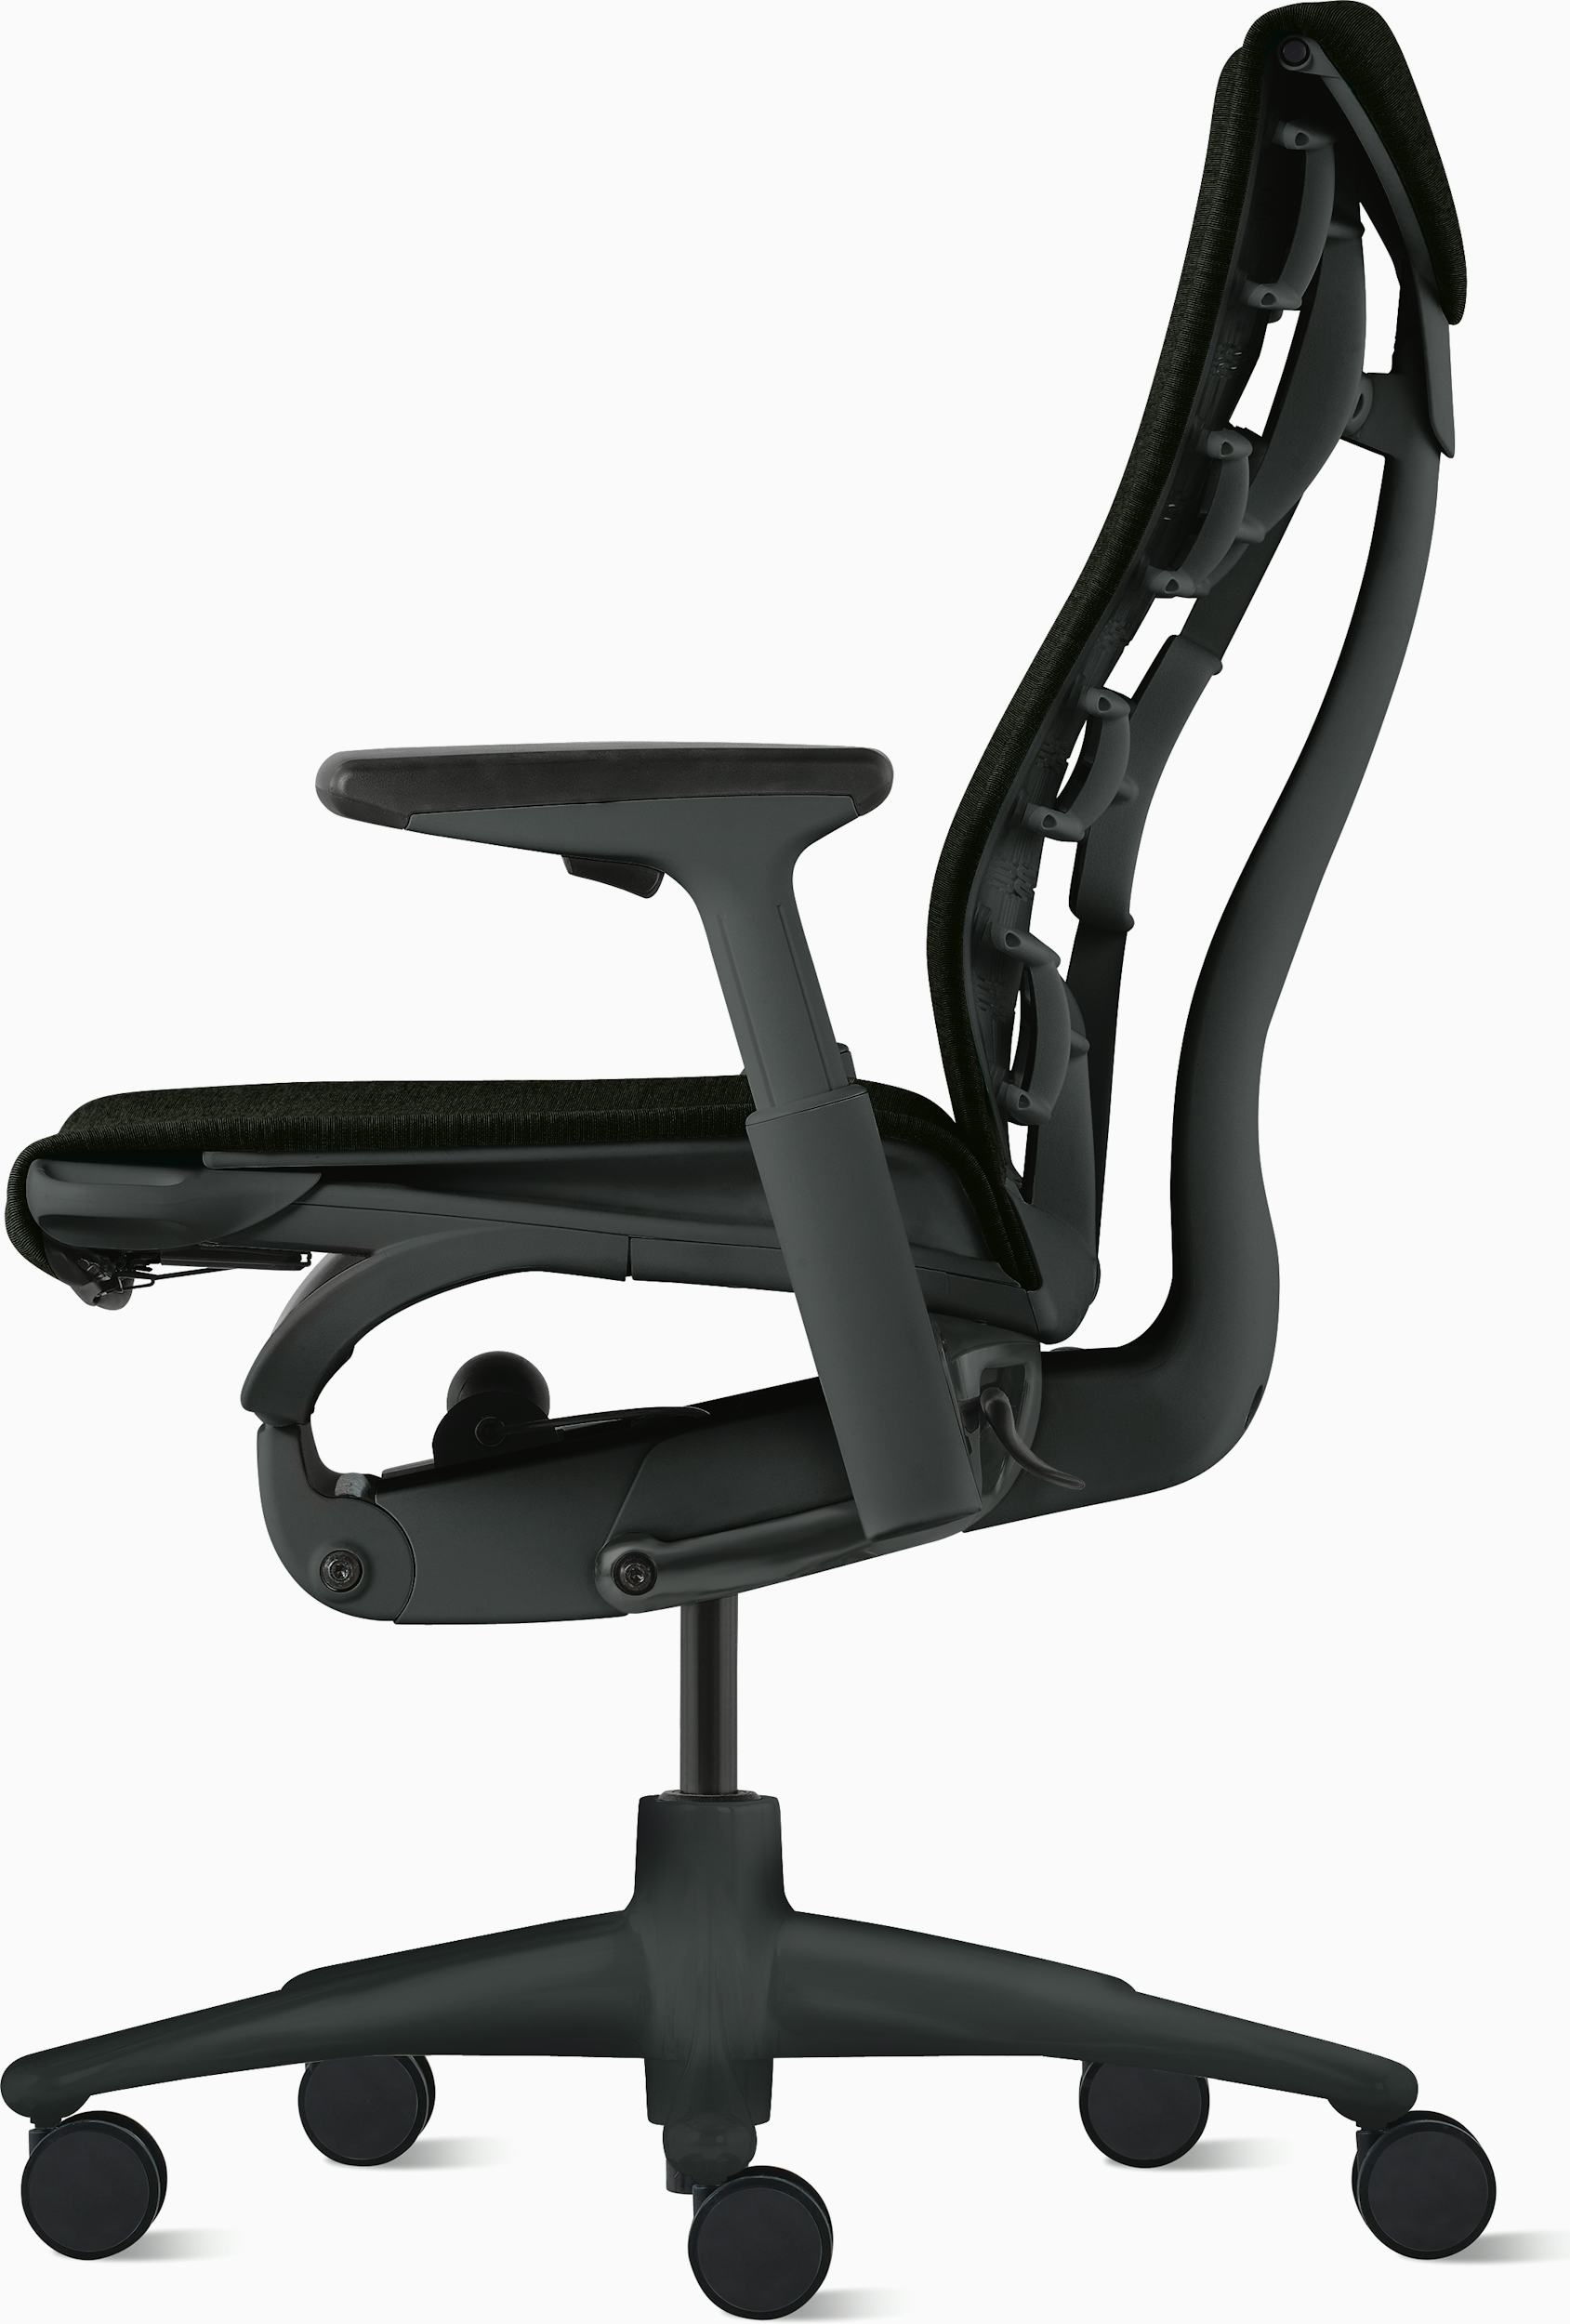 Used Herman Miller Aeron Chair - Arizona Office Liquidators and Designs